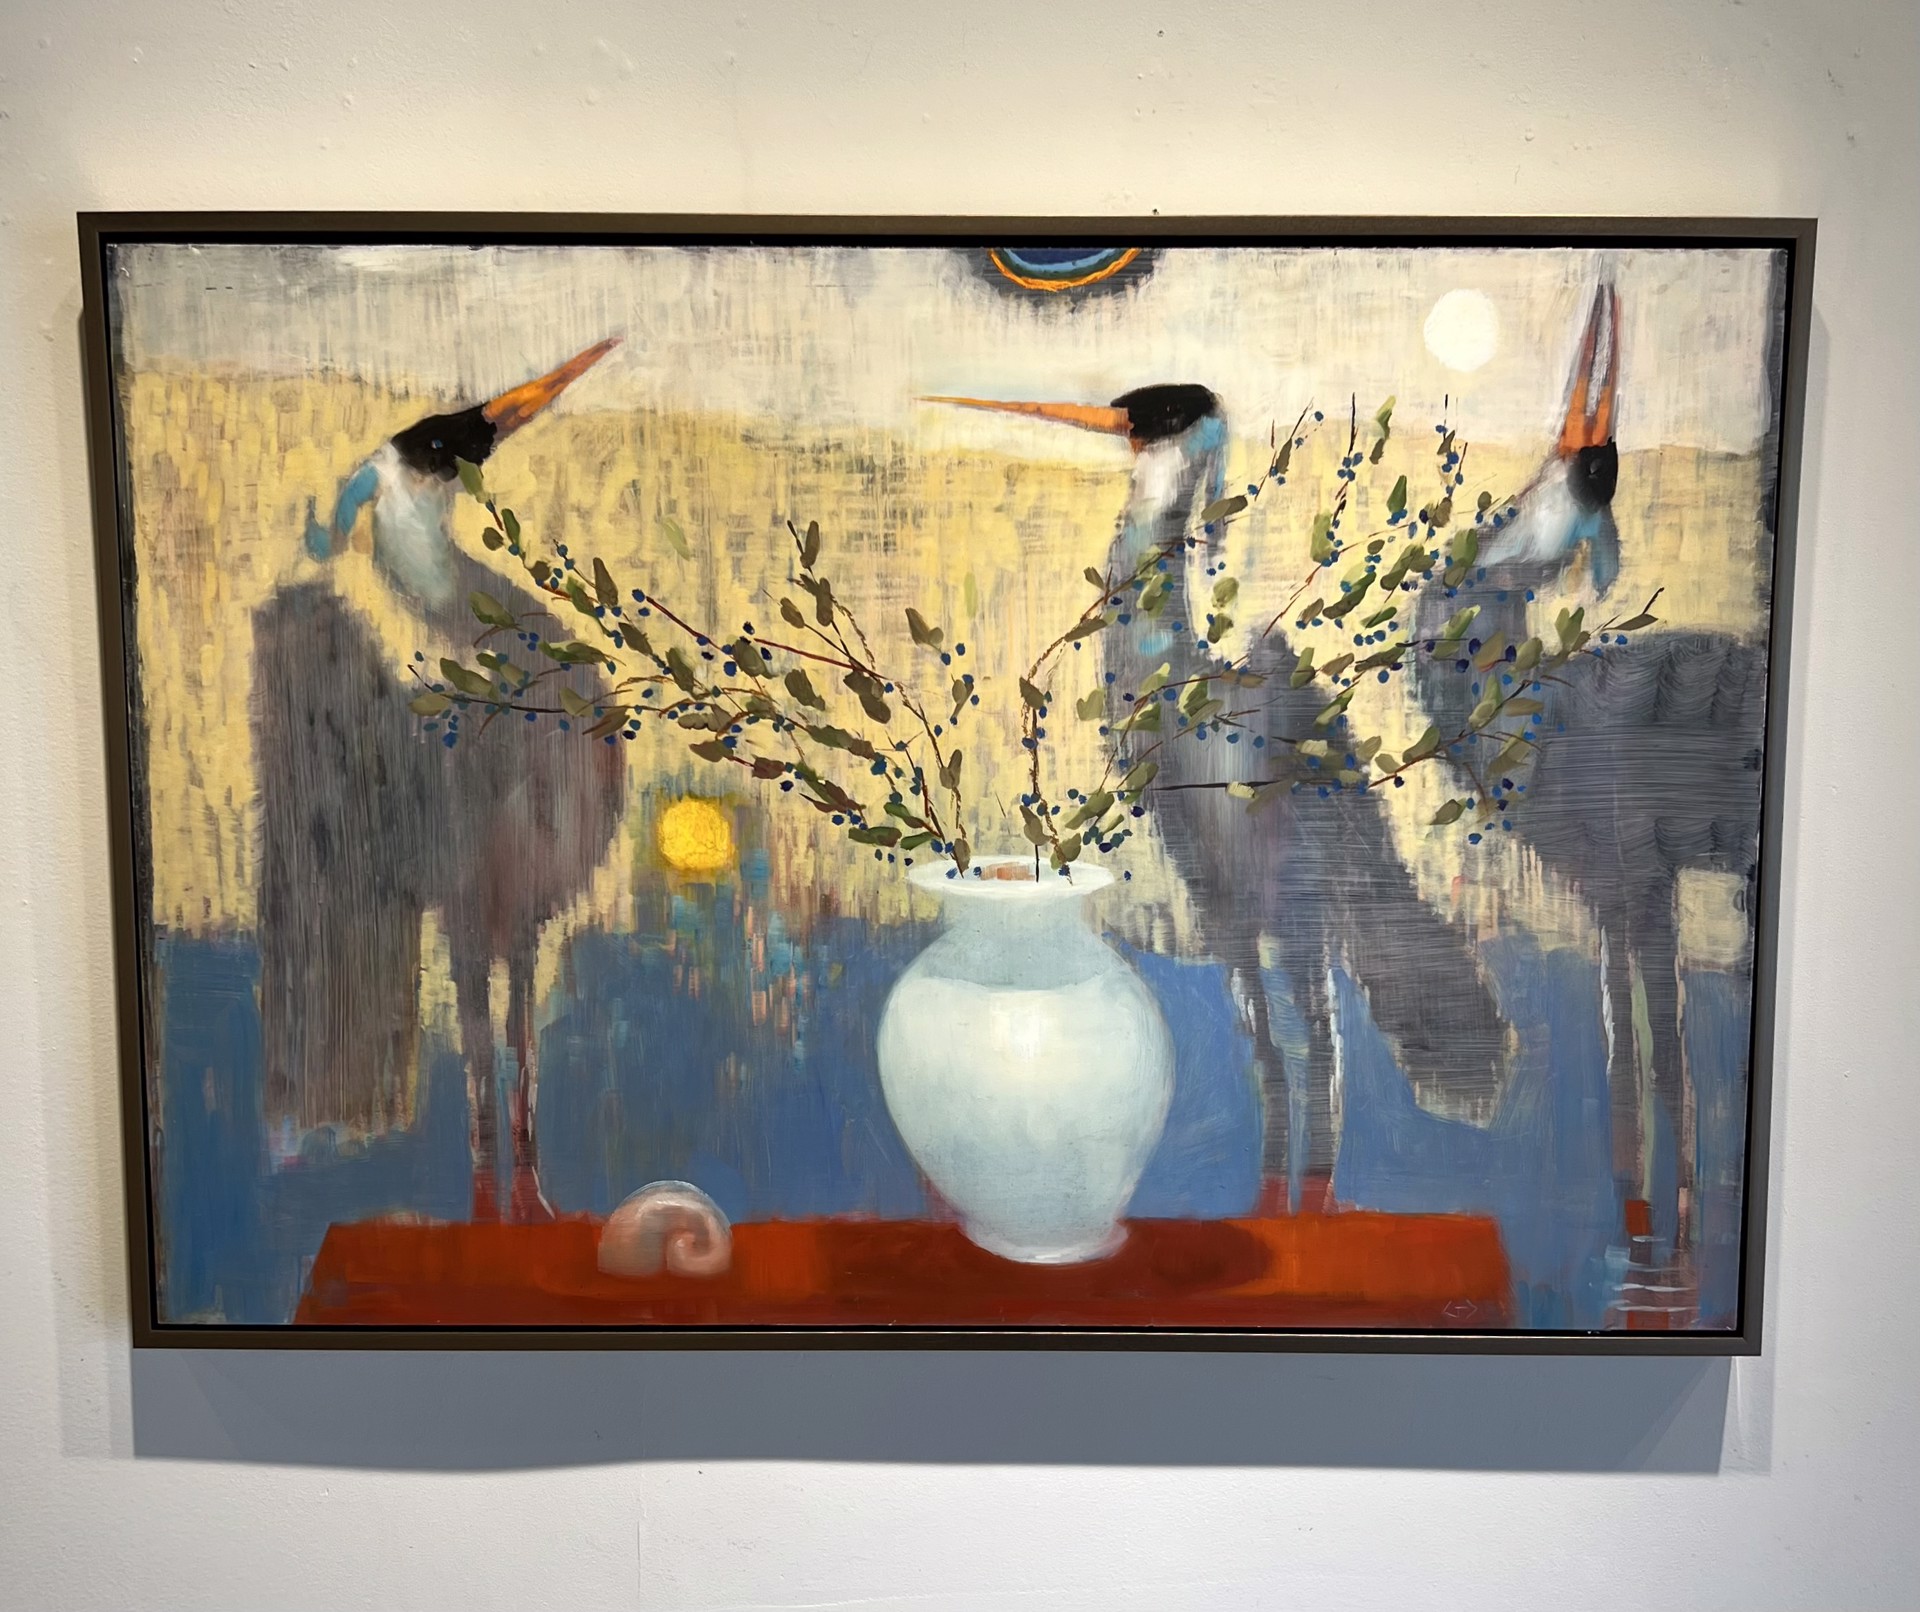 Three Cranes by Greg Decker